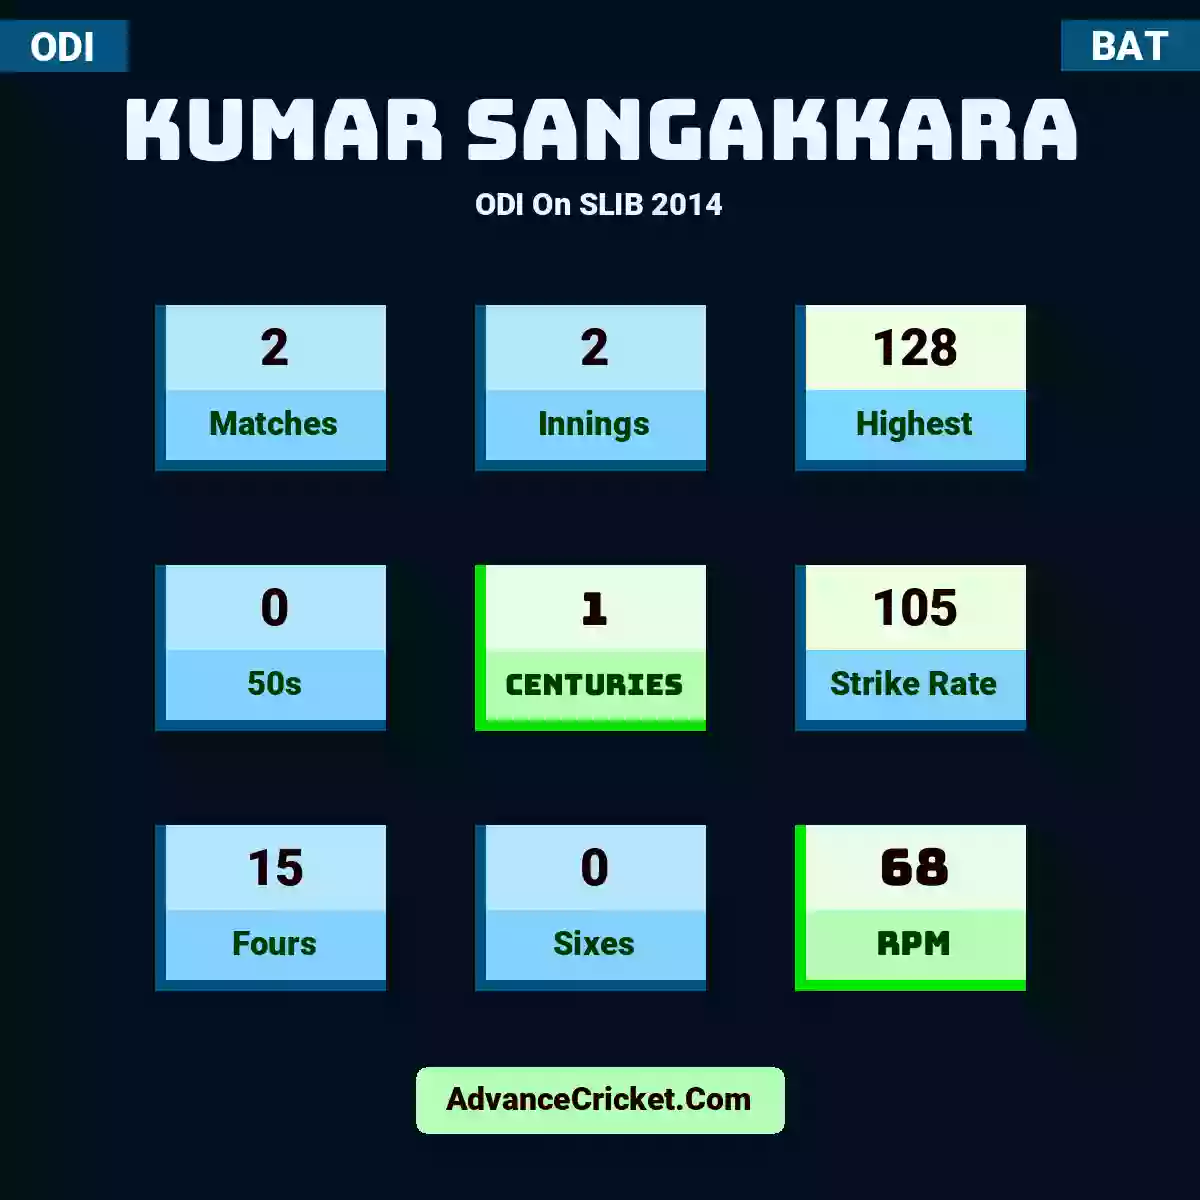 Kumar Sangakkara ODI  On SLIB 2014, Kumar Sangakkara played 2 matches, scored 128 runs as highest, 0 half-centuries, and 1 centuries, with a strike rate of 105. K.Sangakkara hit 15 fours and 0 sixes, with an RPM of 68.